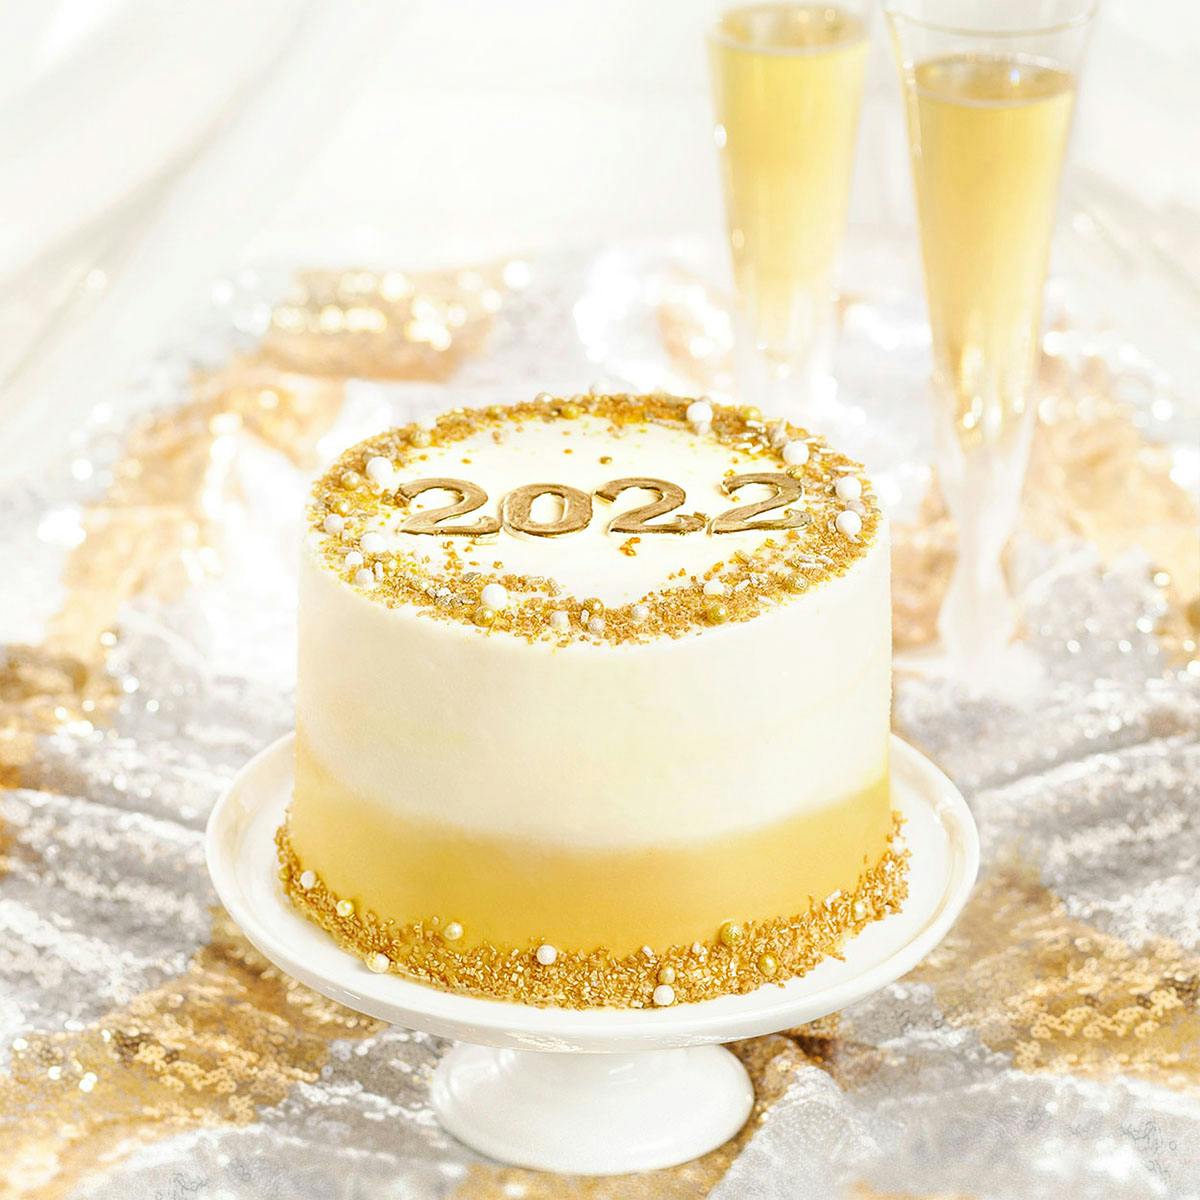 Restaurant Eve's Vanilla Birthday Cake Recipe | Foodal